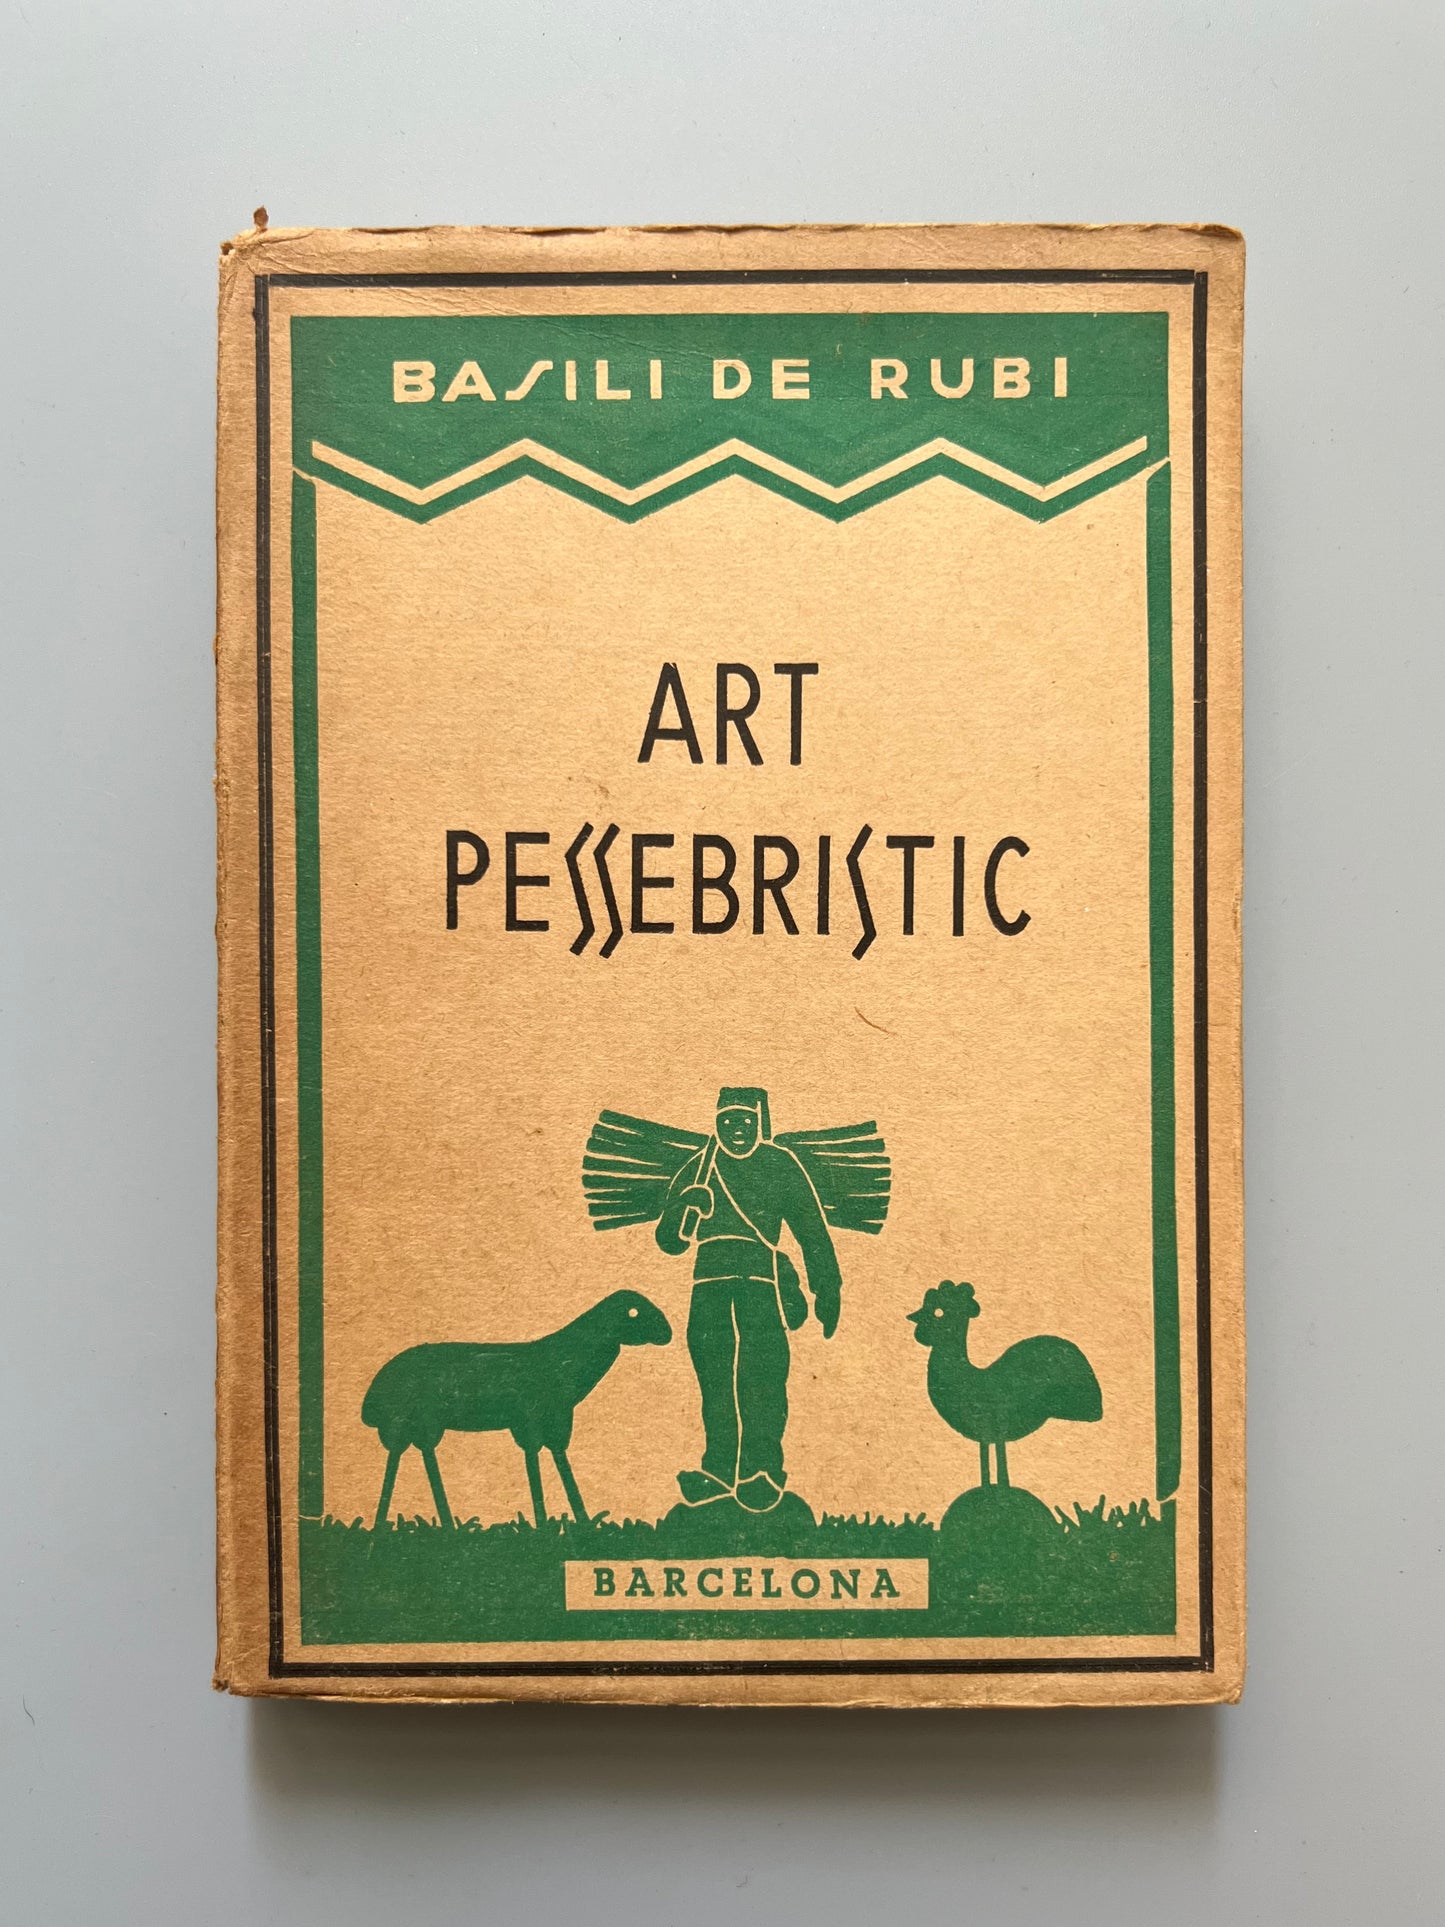 Art pessebristic, Basili de Rubí - Barcelona, 1947